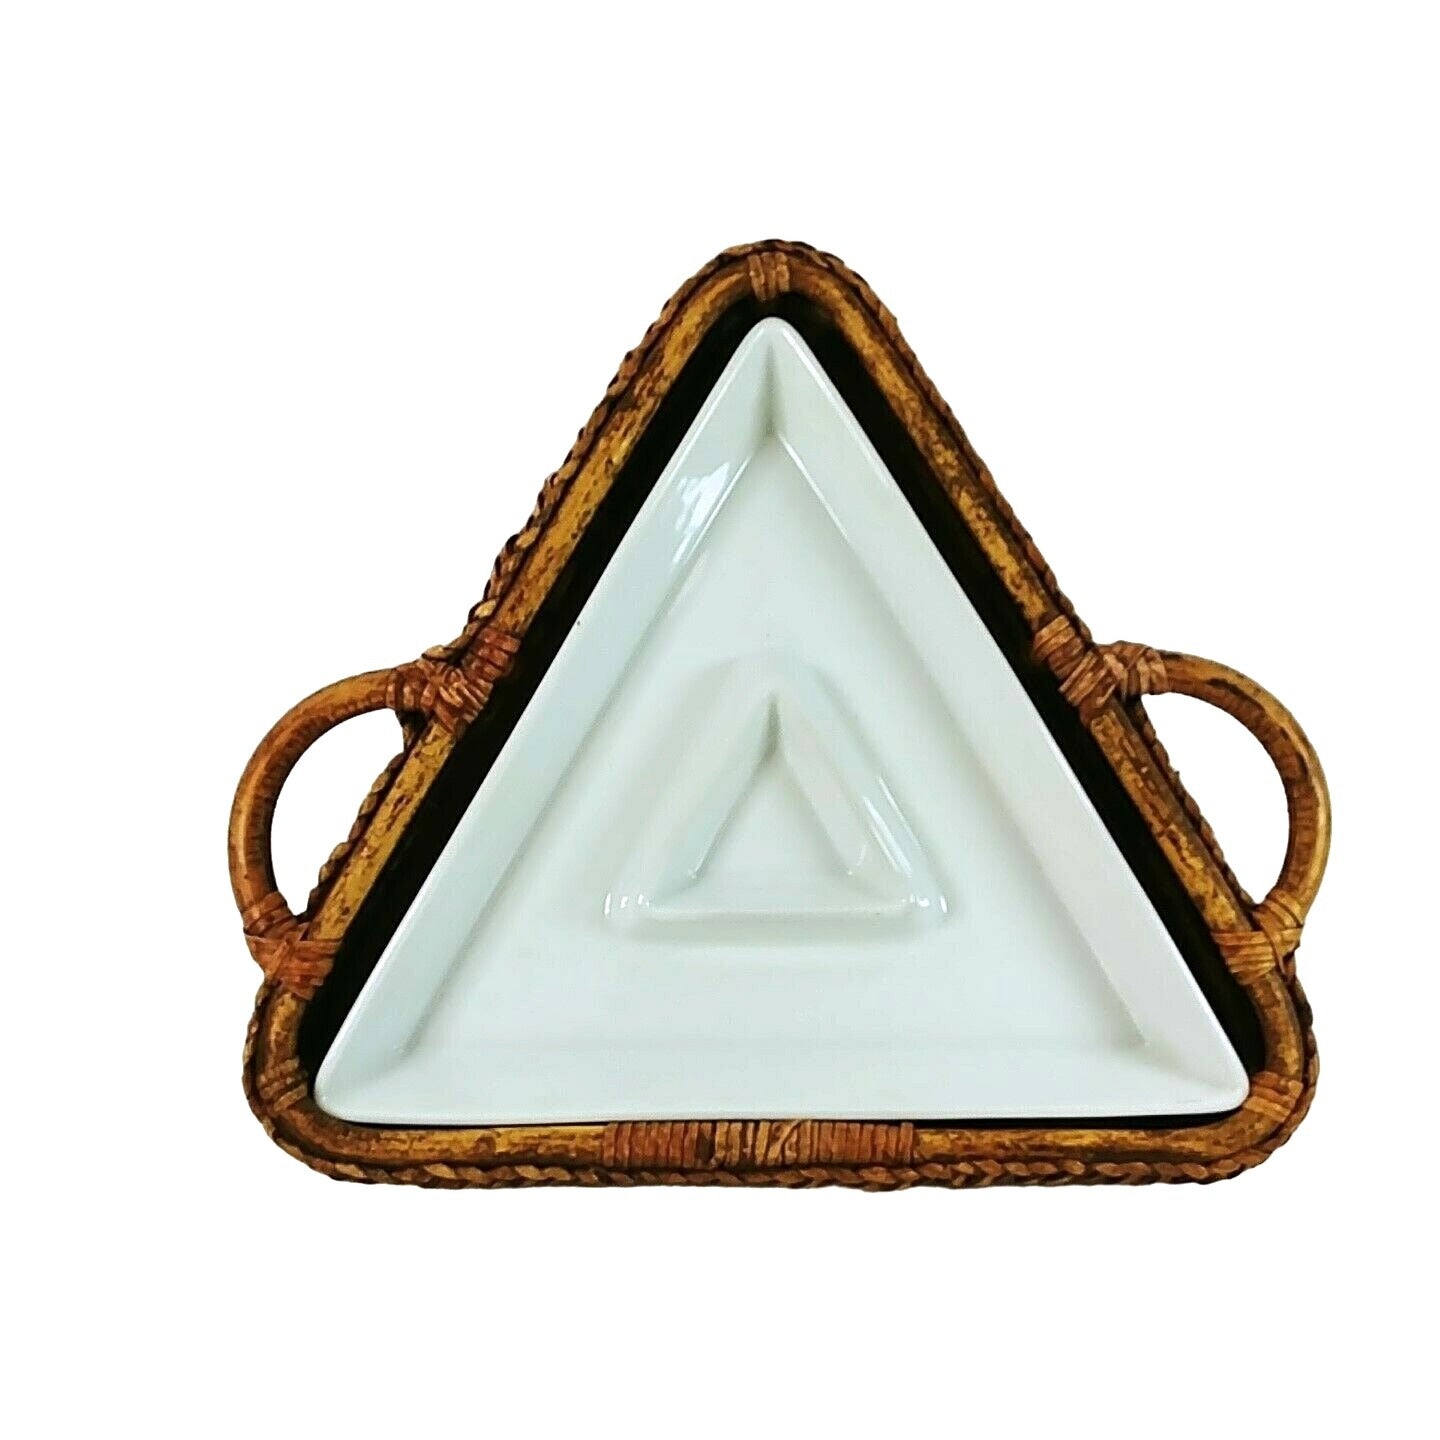 Platter Divided Ceramic Handled Rattan Serving Combo Tray Vintage Serving Decor